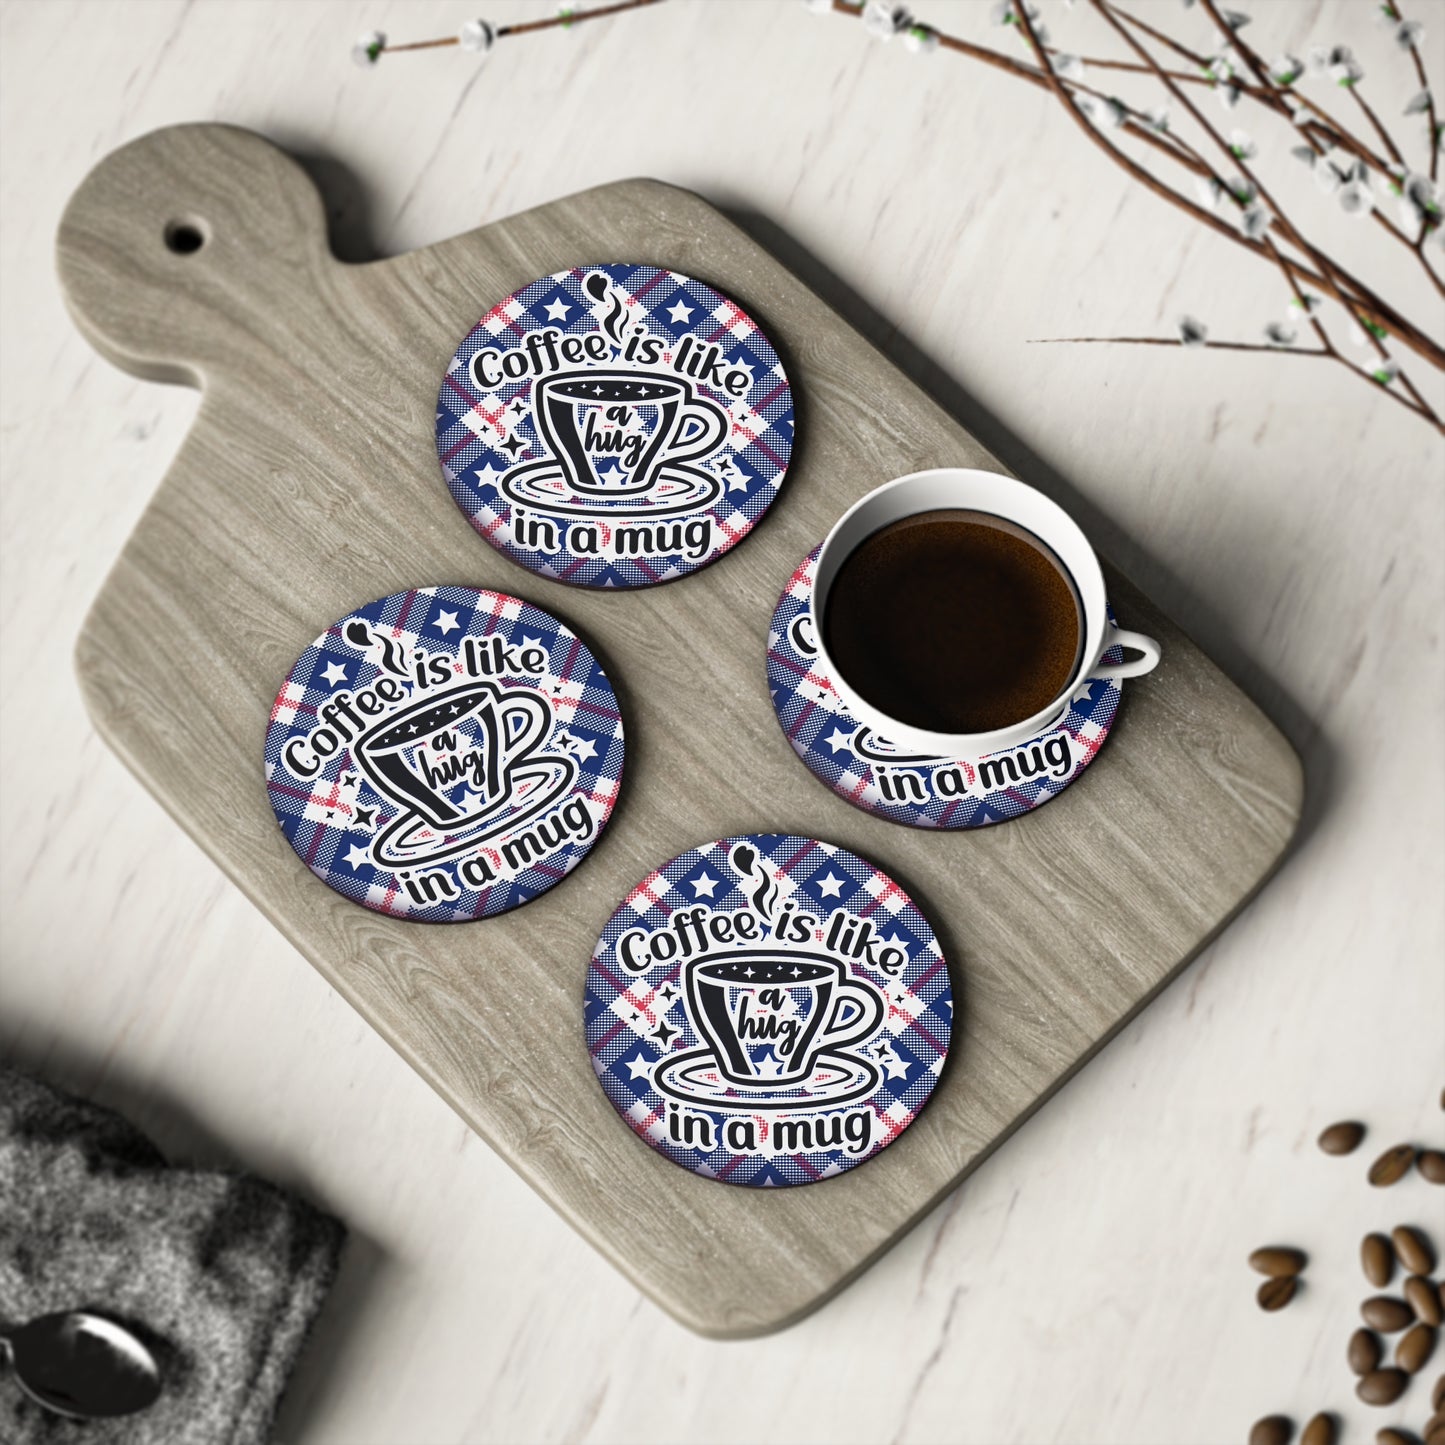 " Coffee Is Like A Hug In A Mug " Round Coasters